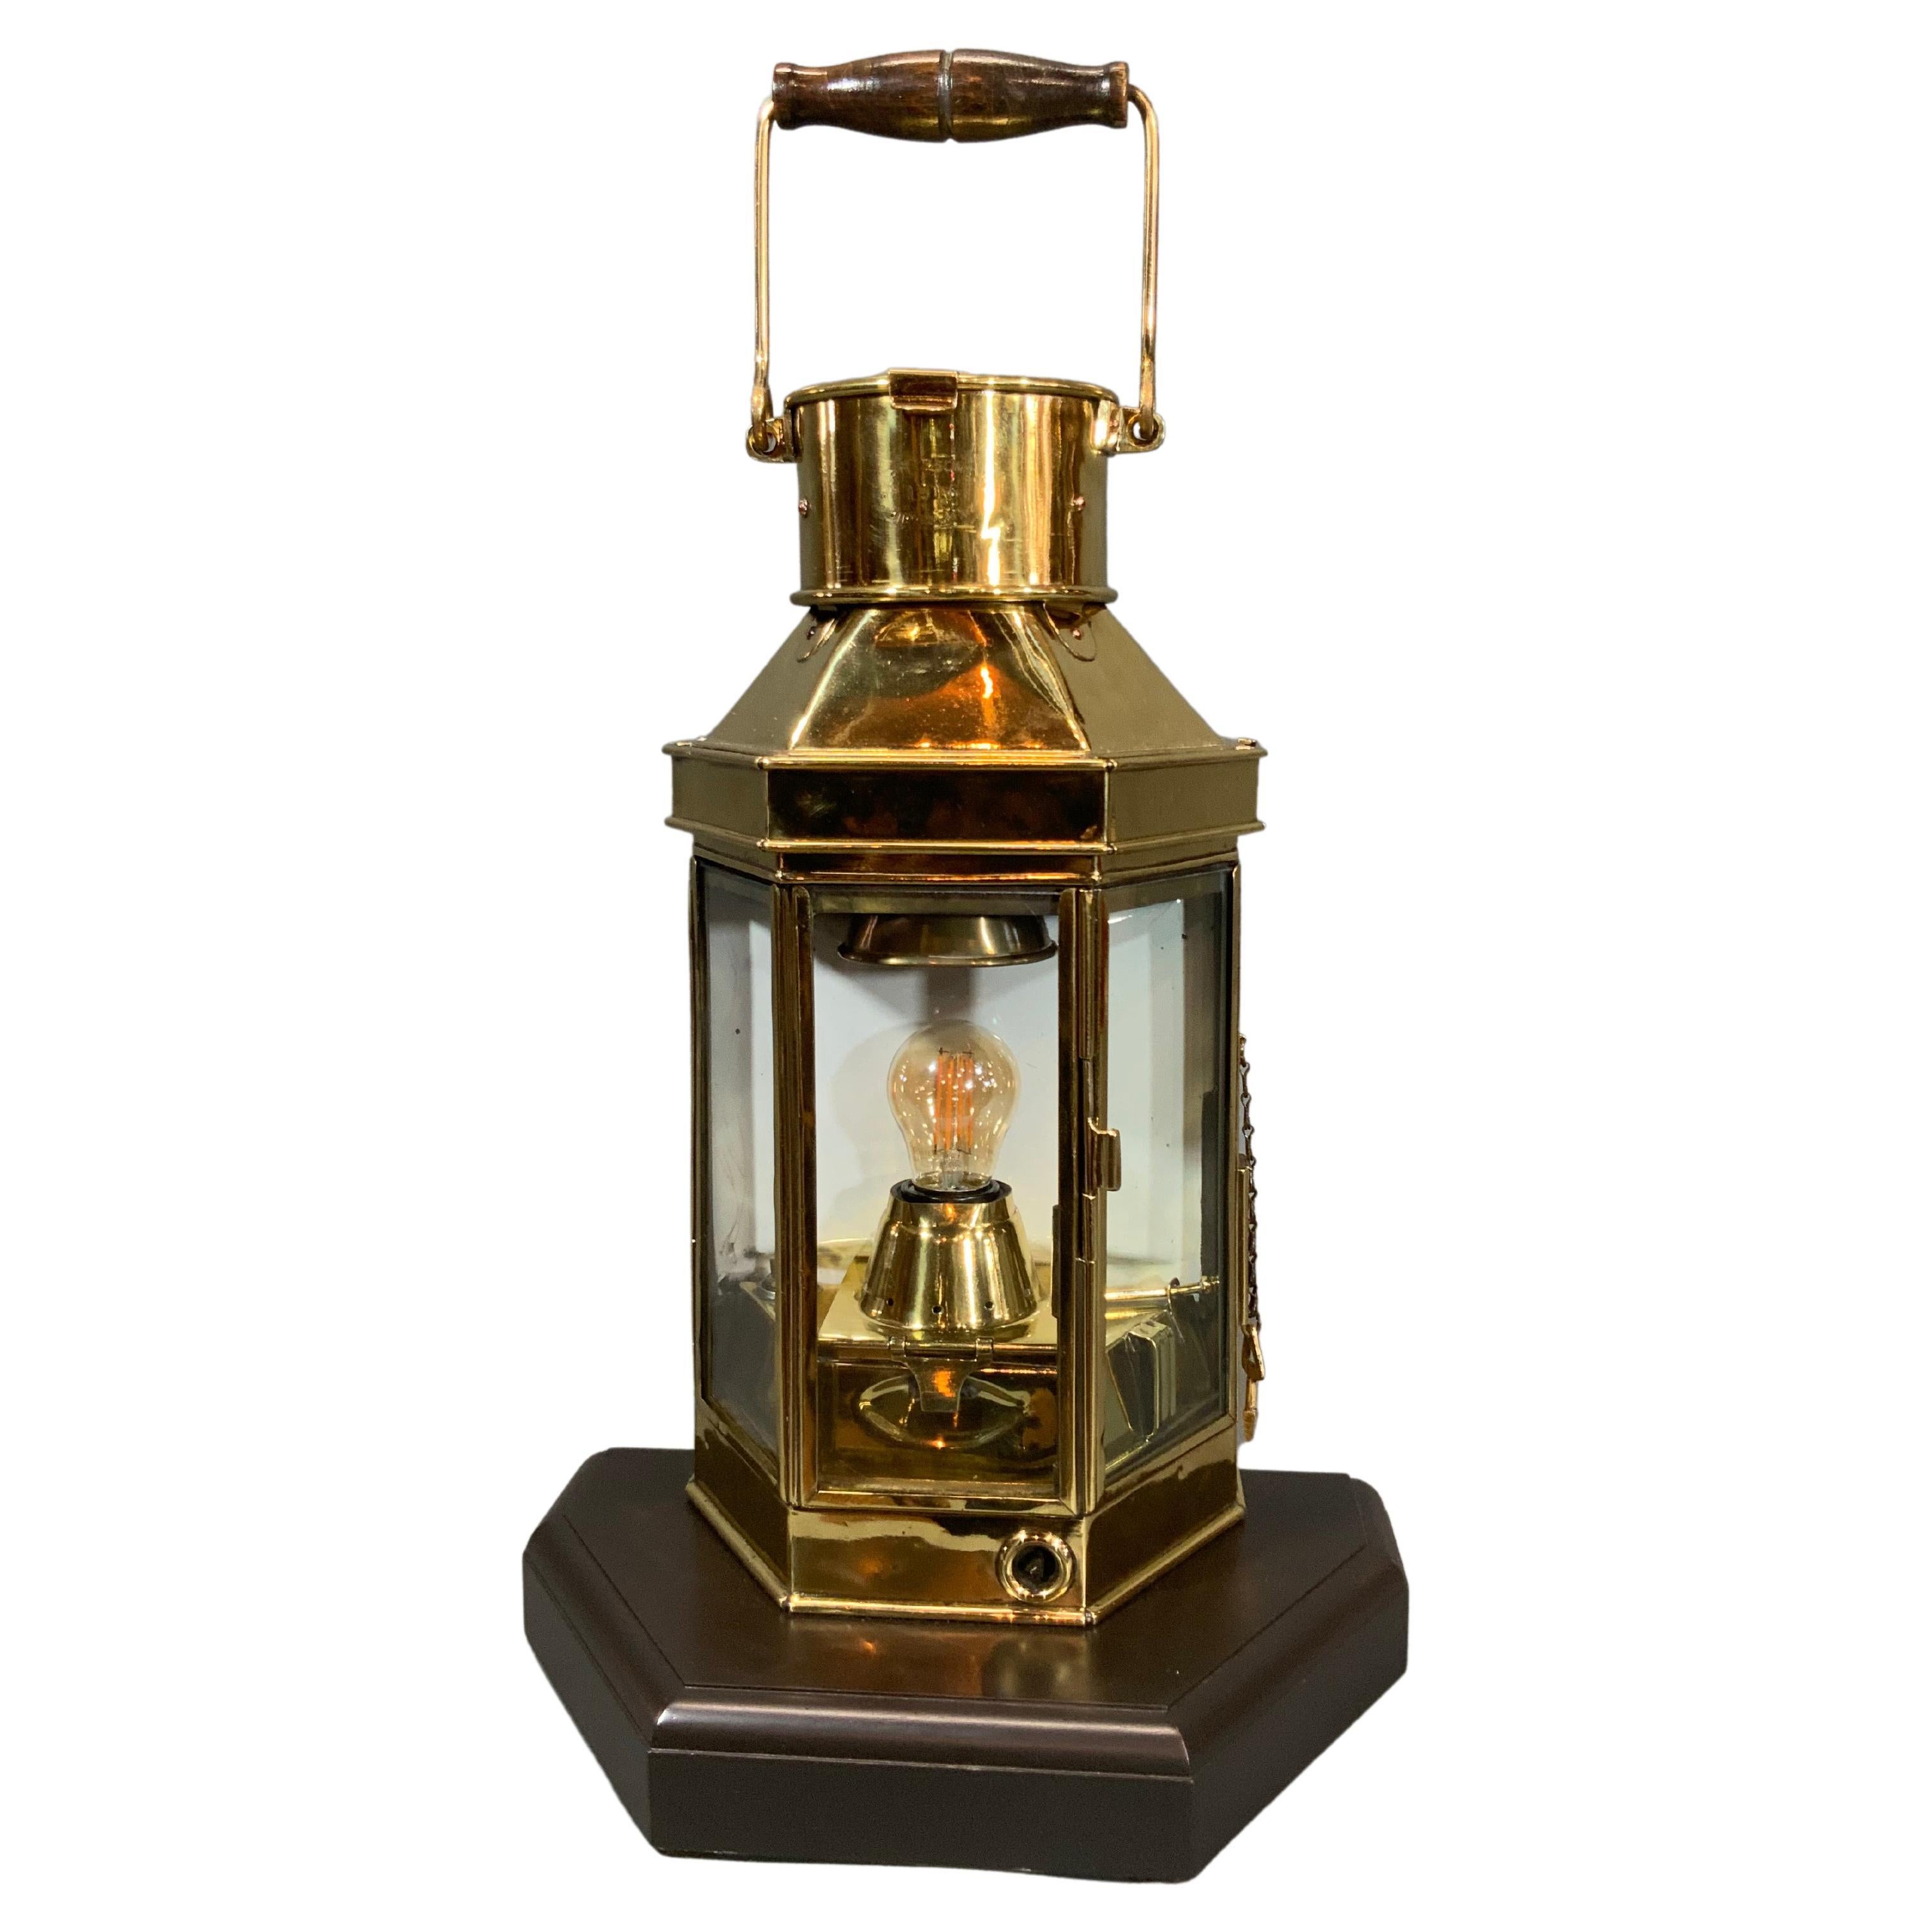 1916 Solid Brass Ship's Cabin Lantern from Bulpitt of Birmingham England